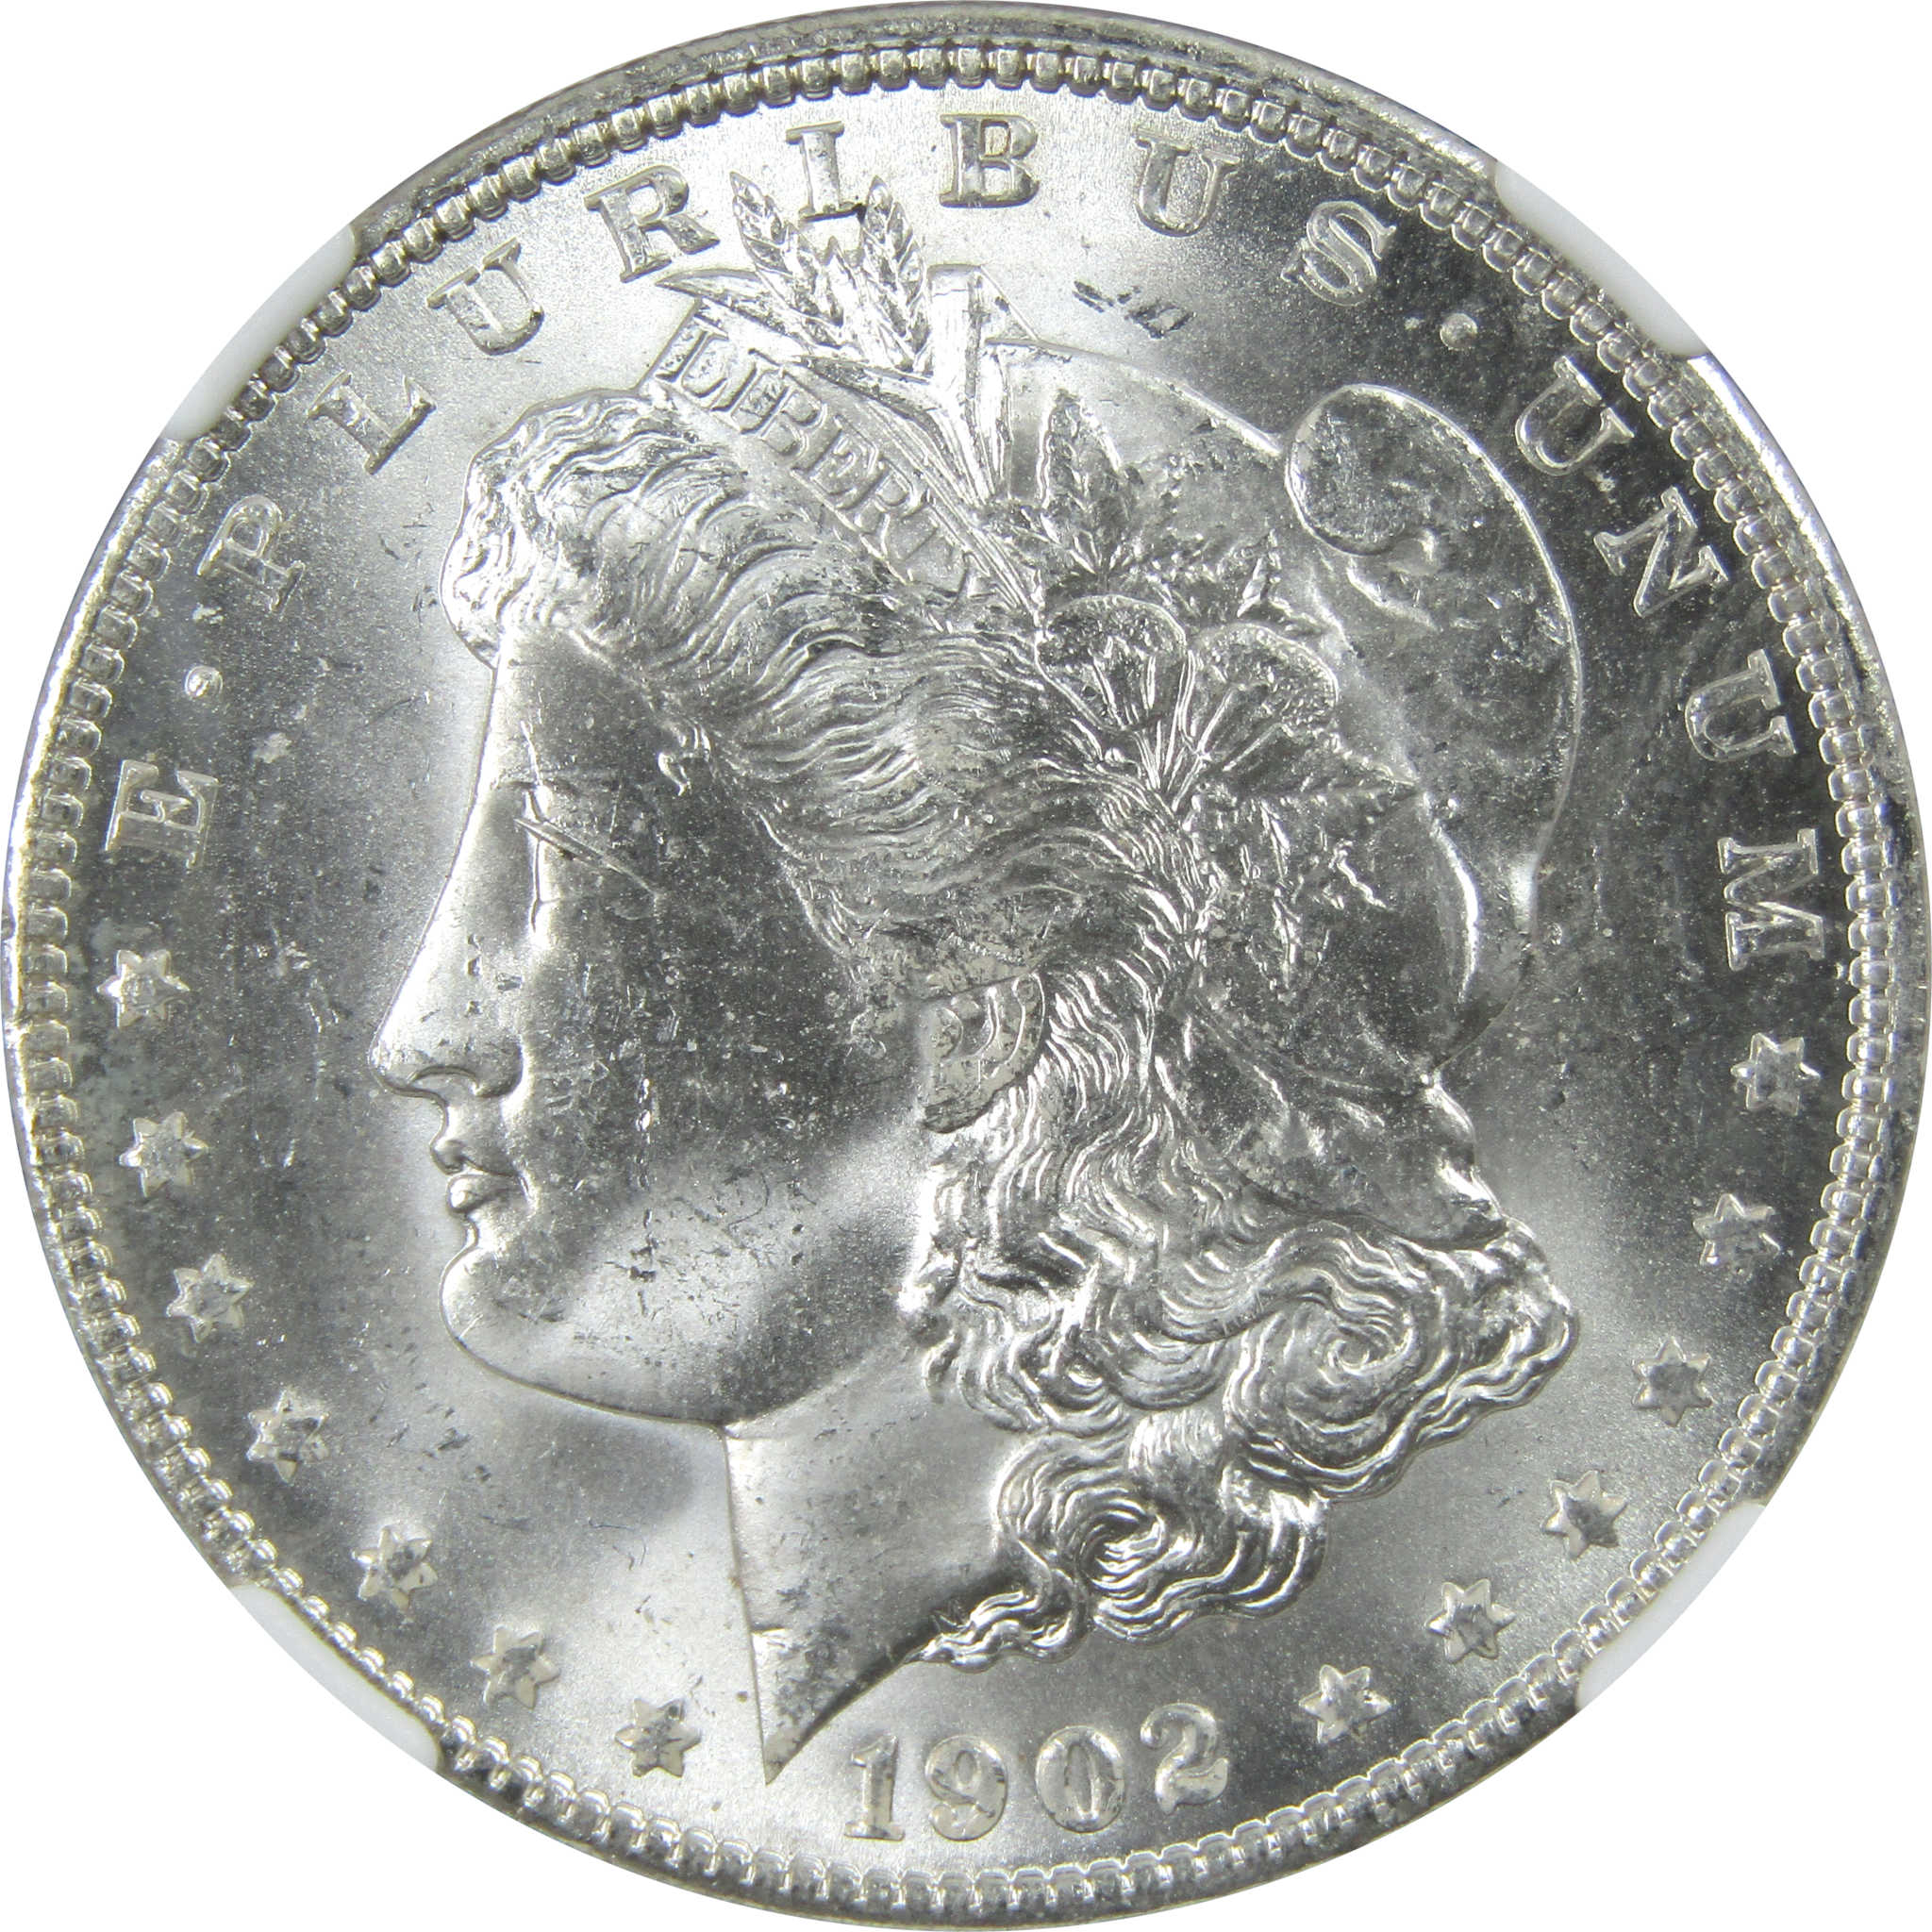 1902 O Morgan Dollar MS 63 NGC Silver $1 Uncirculated Coin SKU:I13774 - Morgan coin - Morgan silver dollar - Morgan silver dollar for sale - Profile Coins &amp; Collectibles